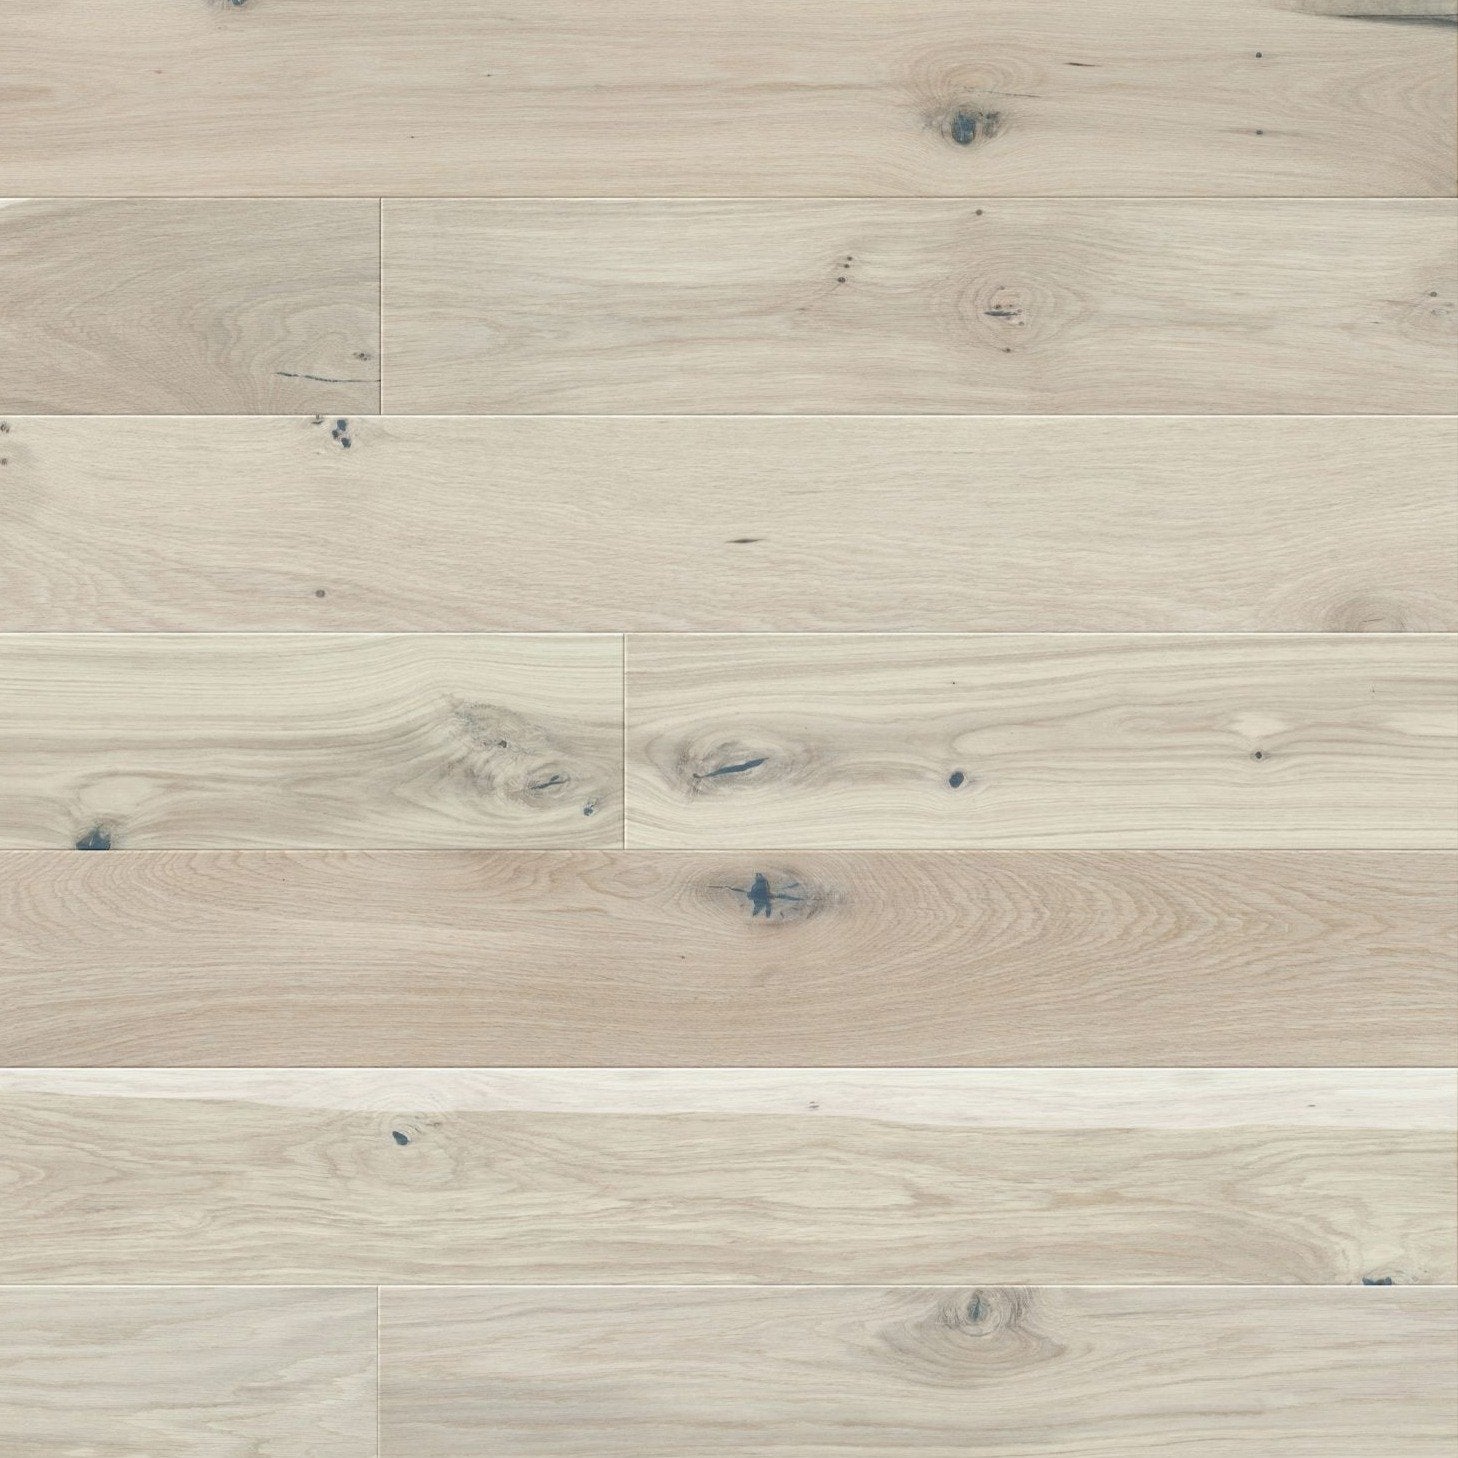 Sanded  Ashton & Rose Lune white oak flooring from our light wood collection